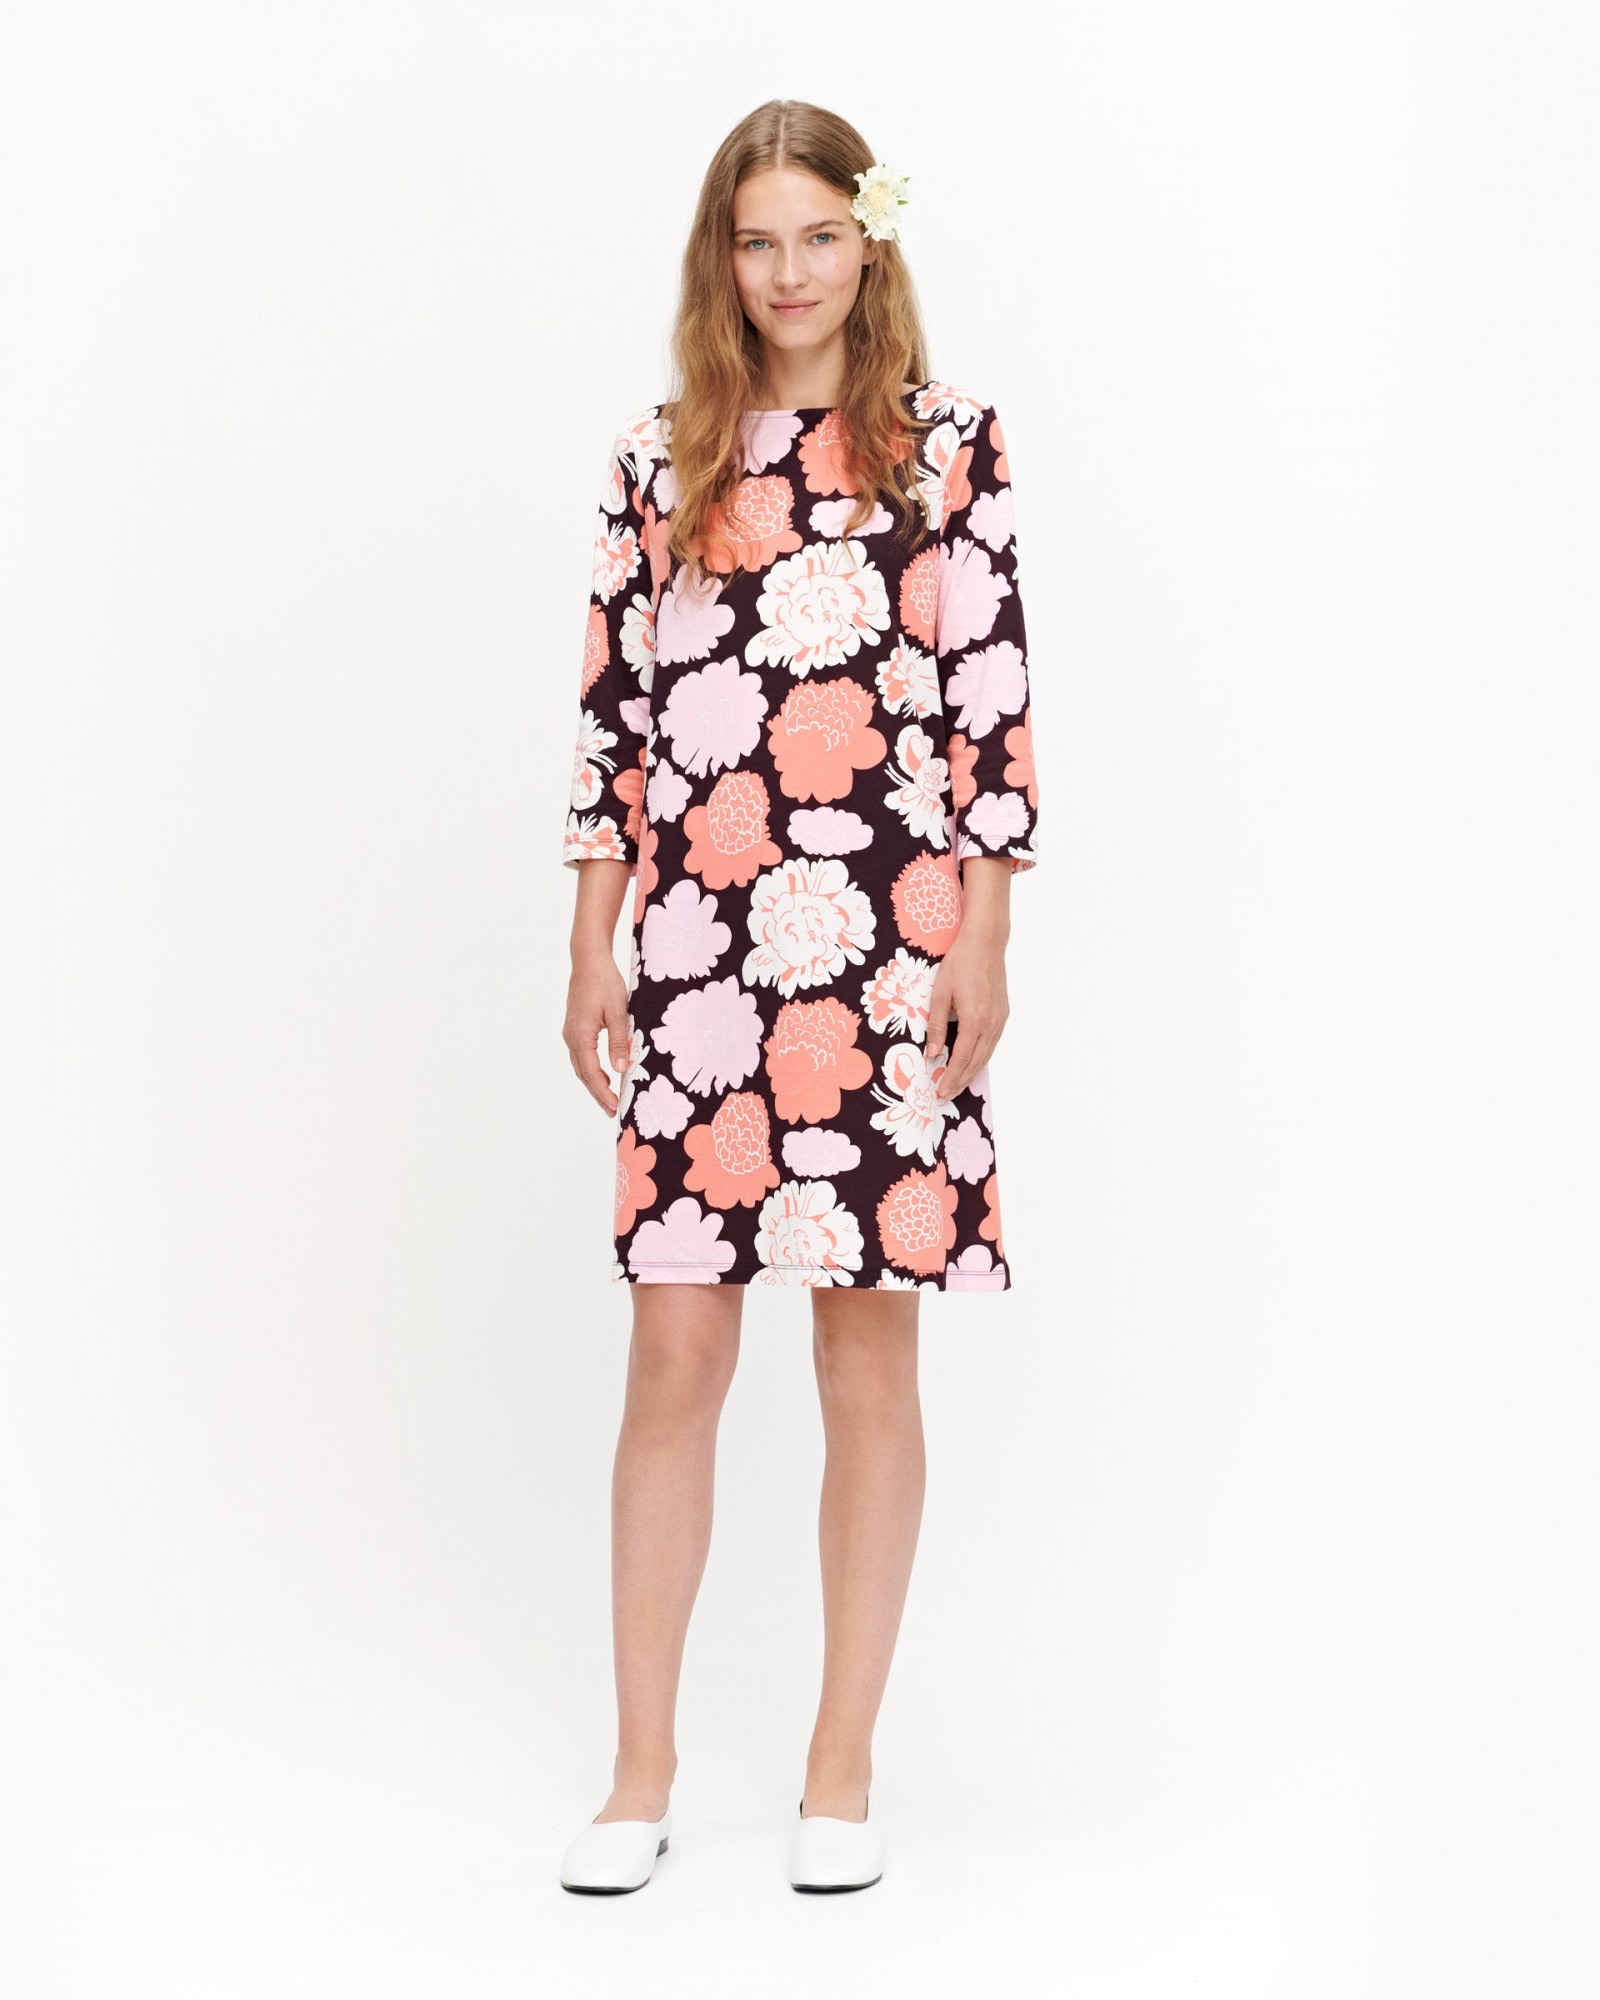 Pioni Marimekko Clothing Collection – Spring / Summer 2020